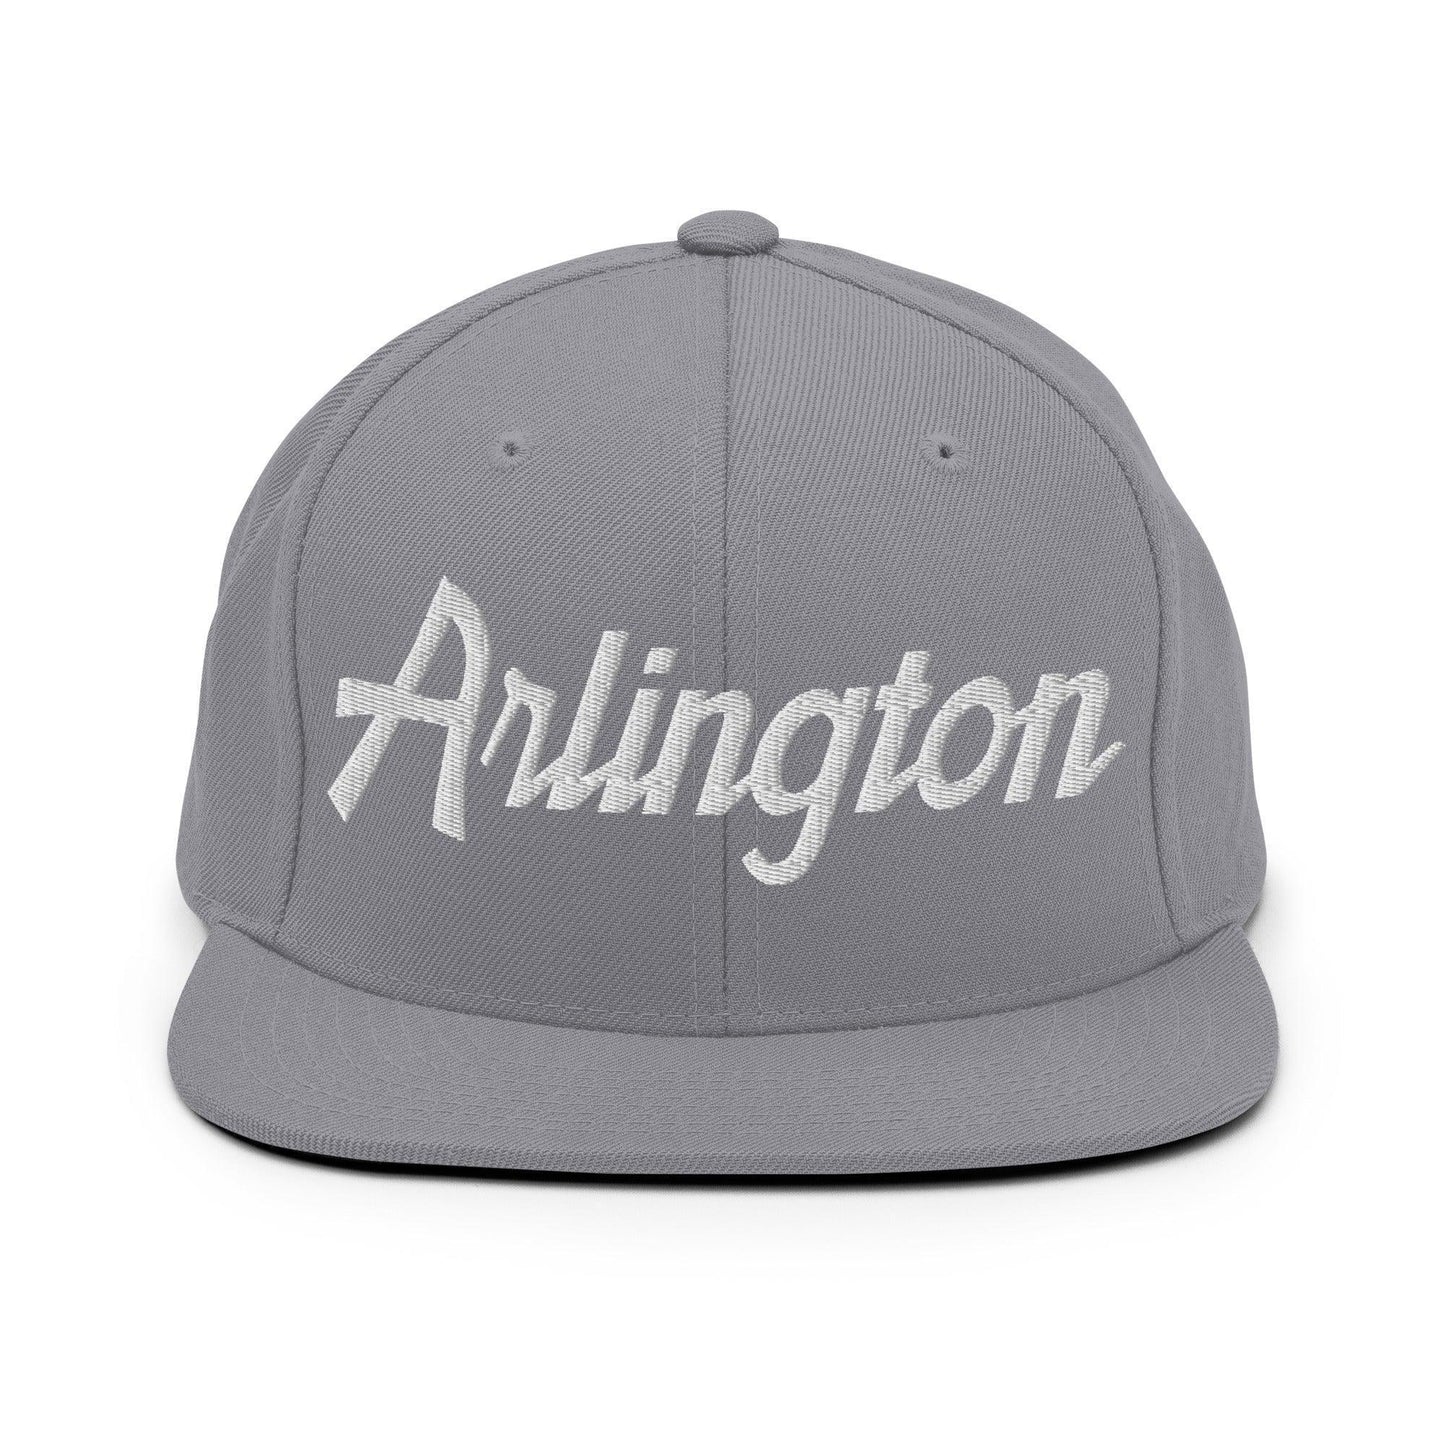 Arlington Script Snapback Hat Silver